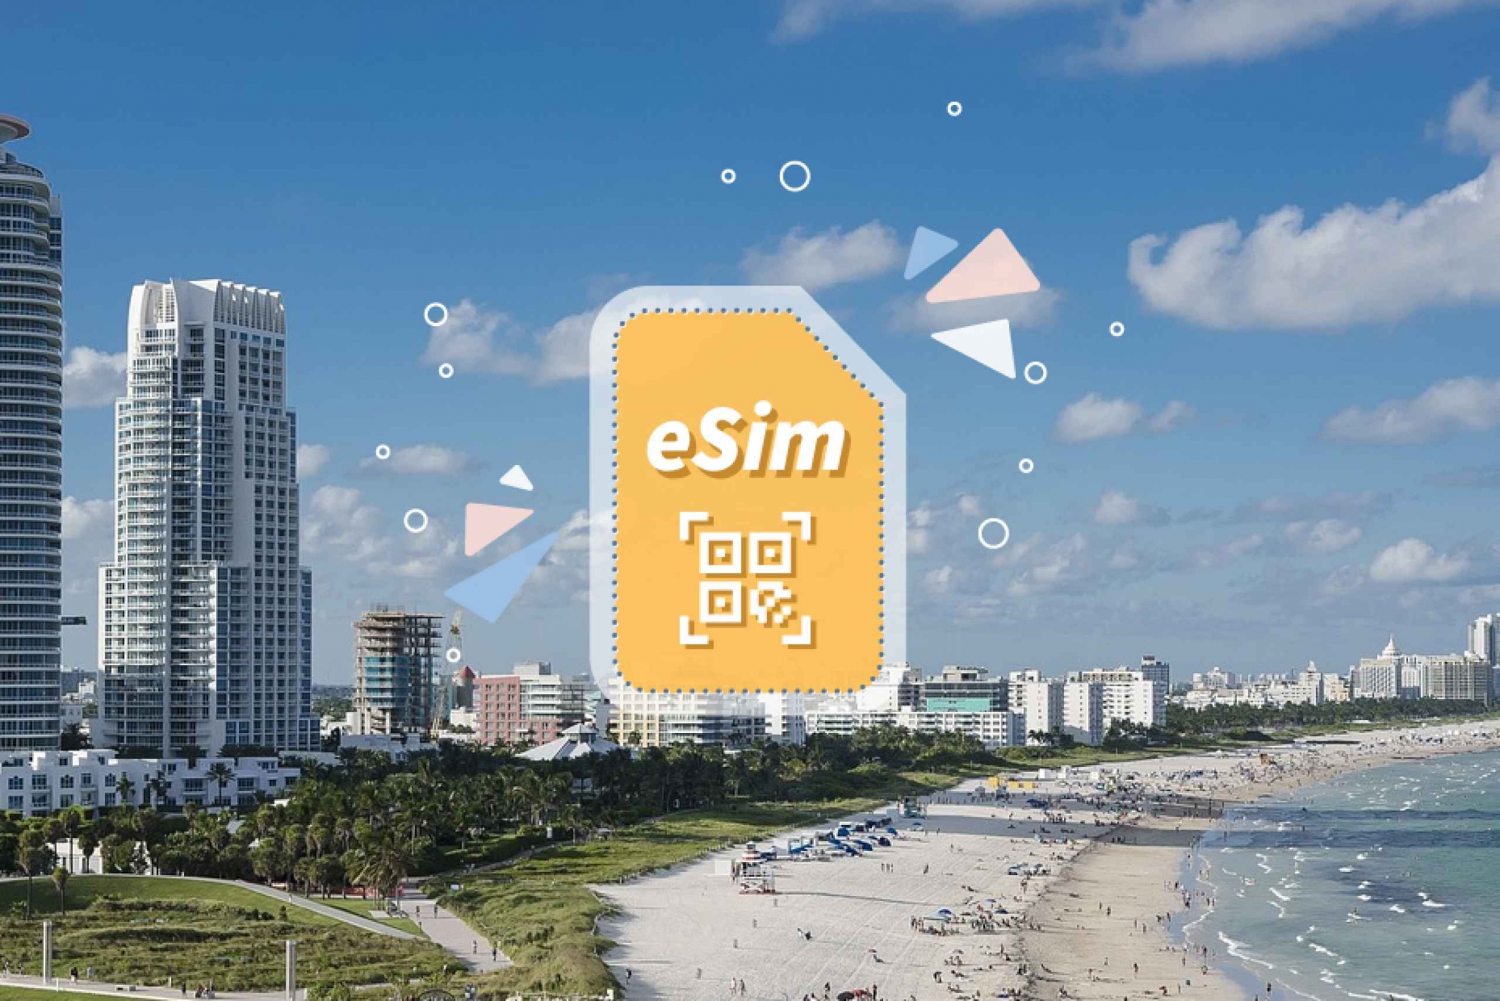 Miami: USA eSIM Roaming (Optional with Canada)